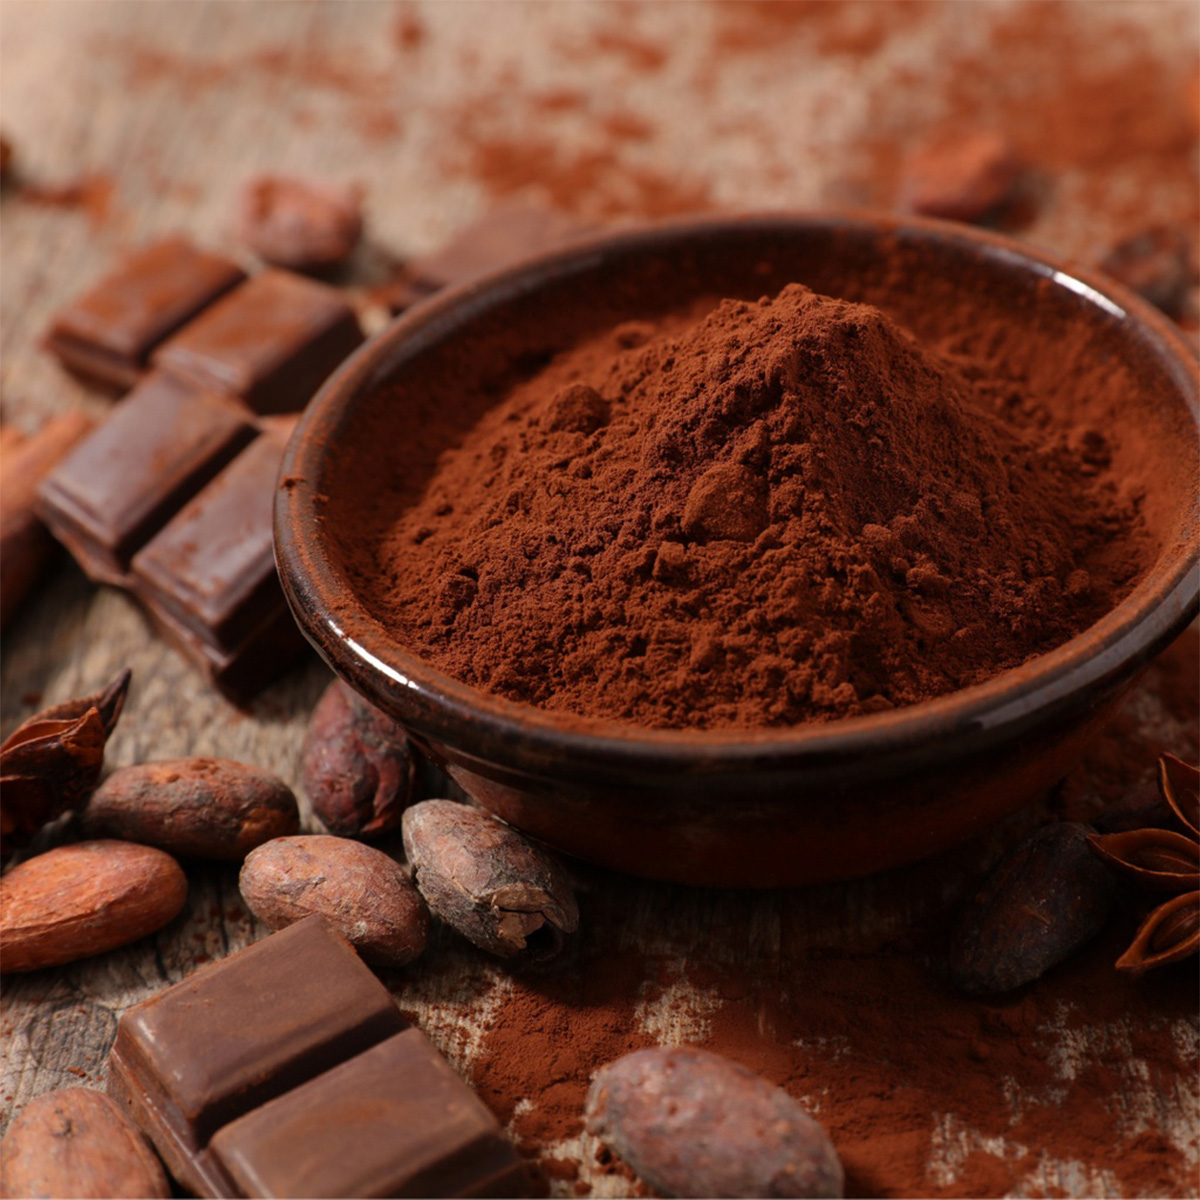 Chocolate derivatives